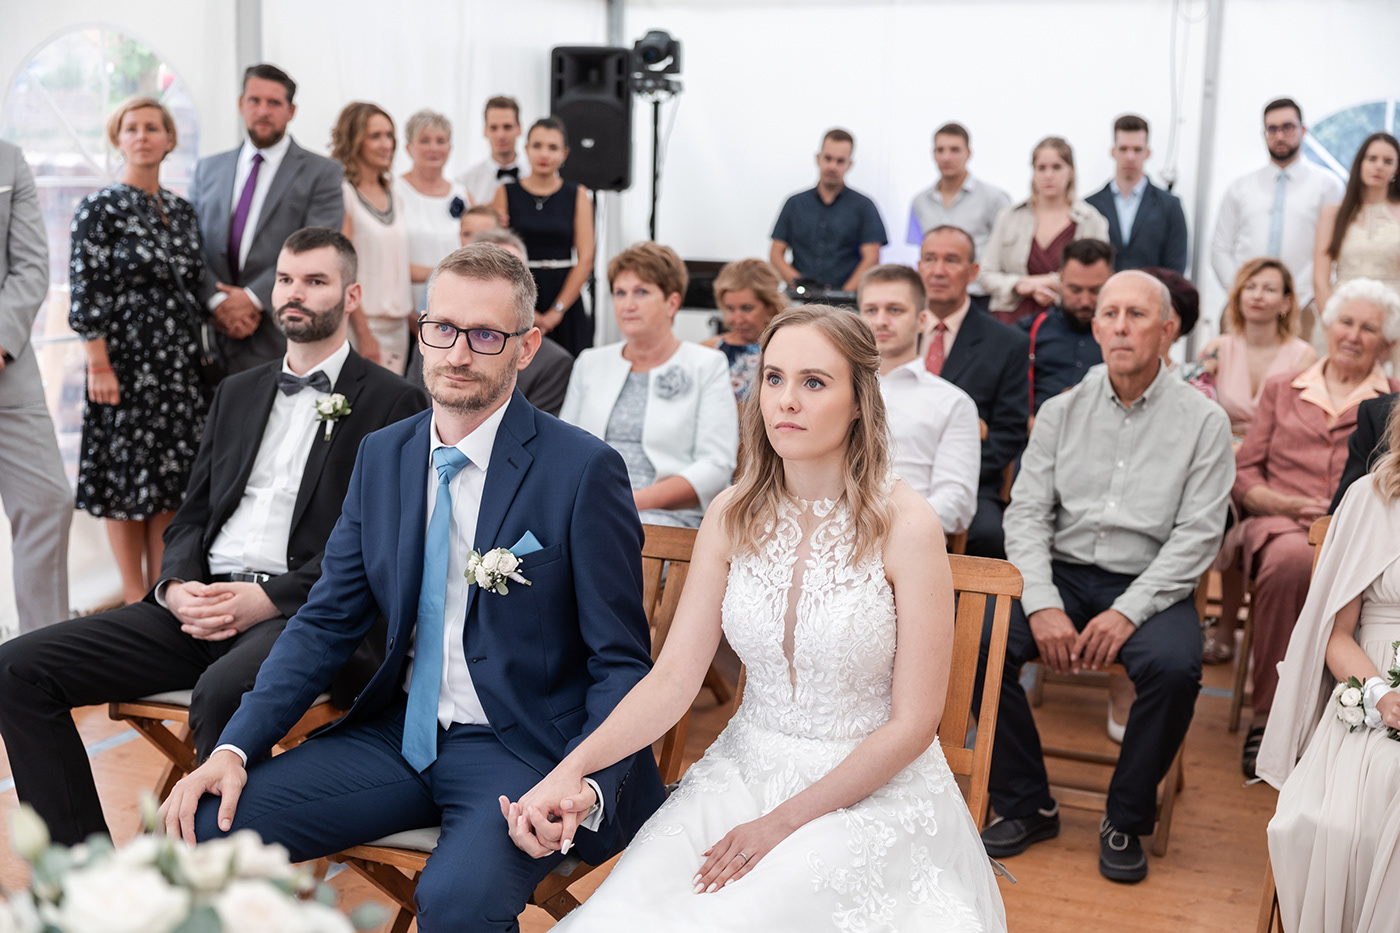 Canon photographer photoshoot wedding Wedding Photography